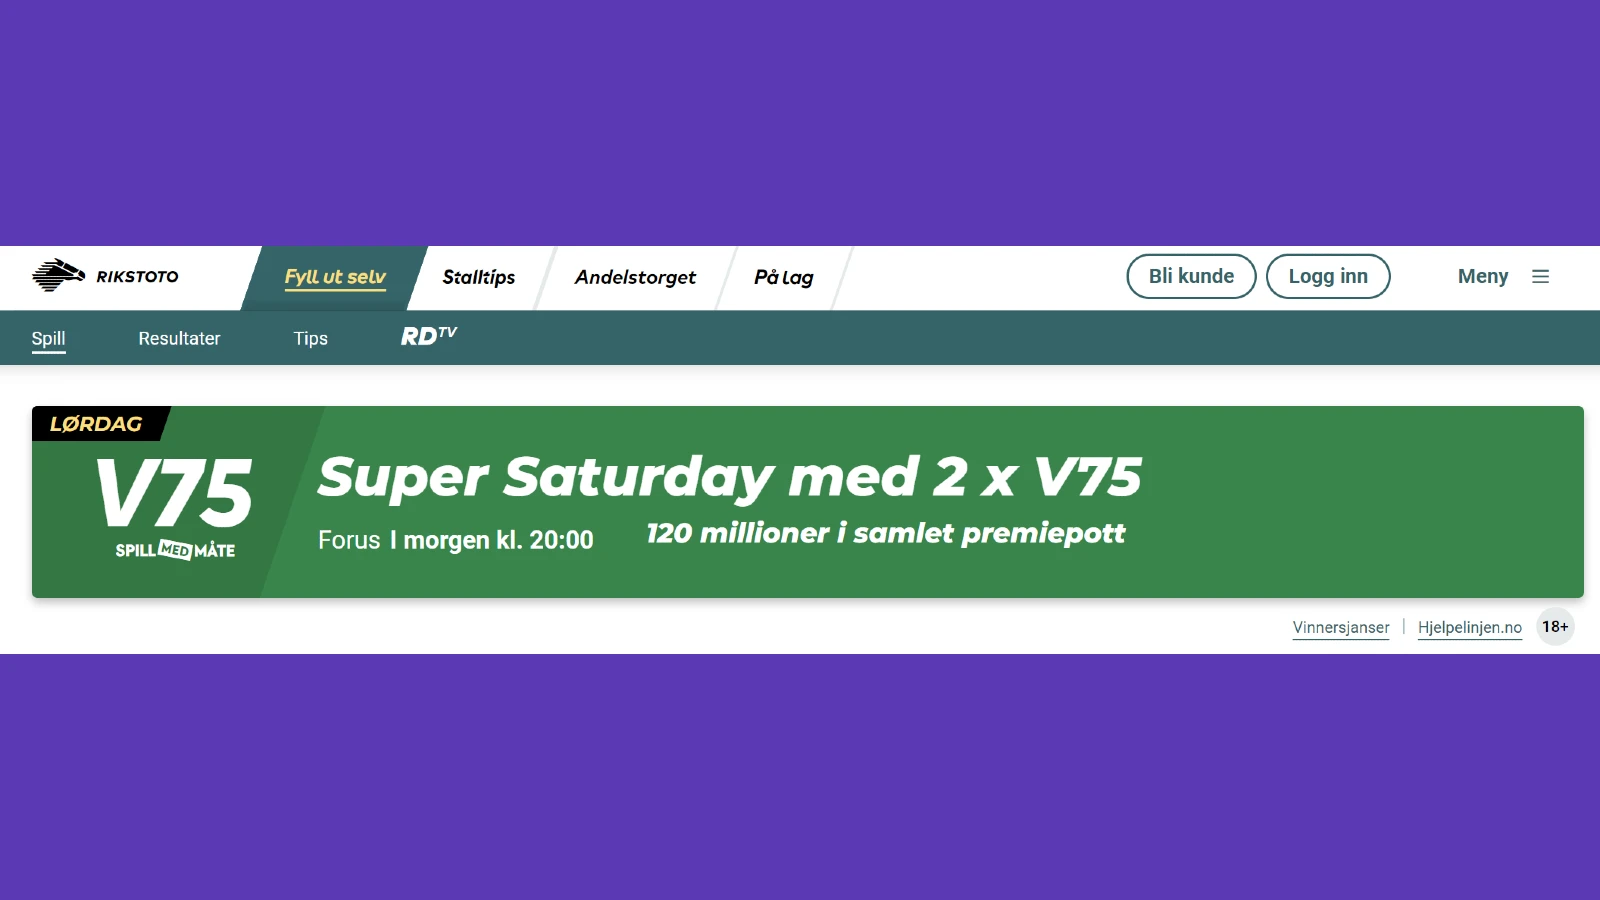 Et reklamebanner for "super lørdag med 2 x v75" med et spill på hest racing arrangement med en premiepott på 120 millioner, planlagt på Forus i morgen kl 20